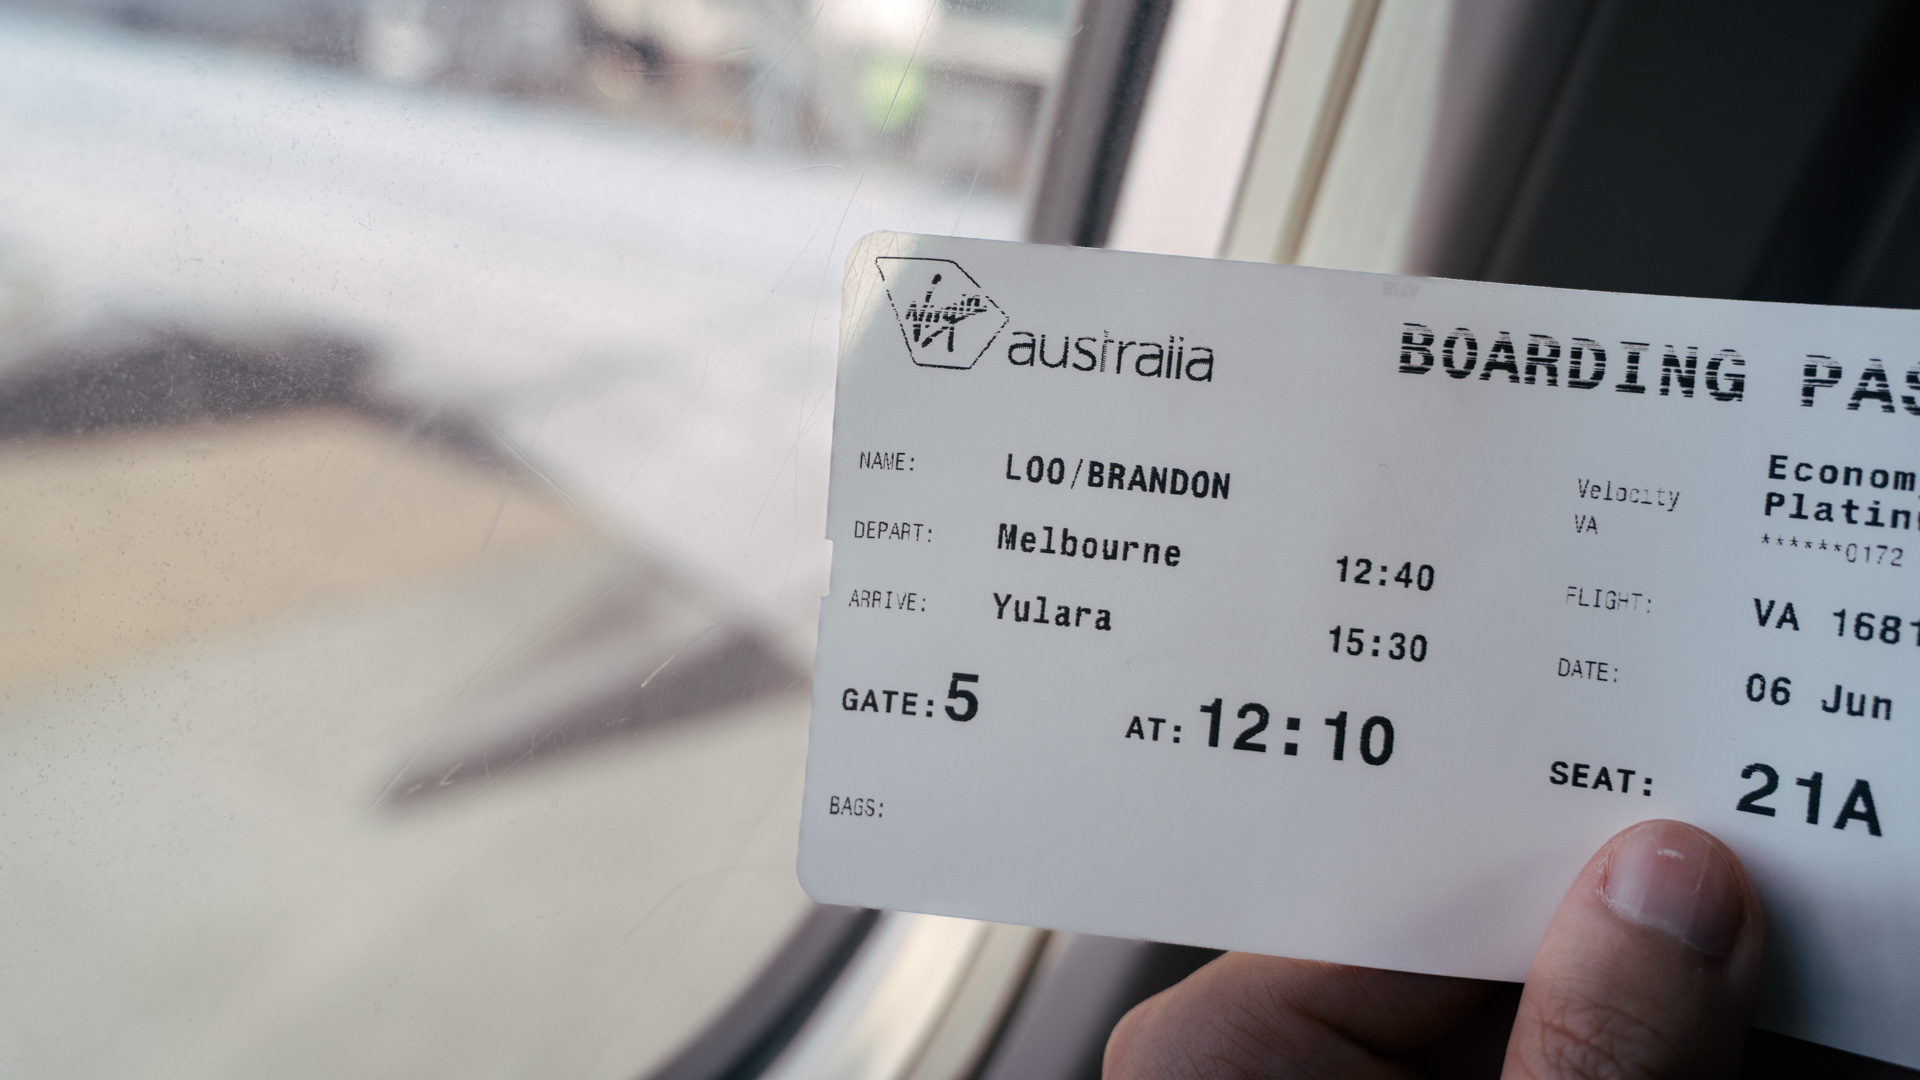 Virgin Australia Uluru boarding pass